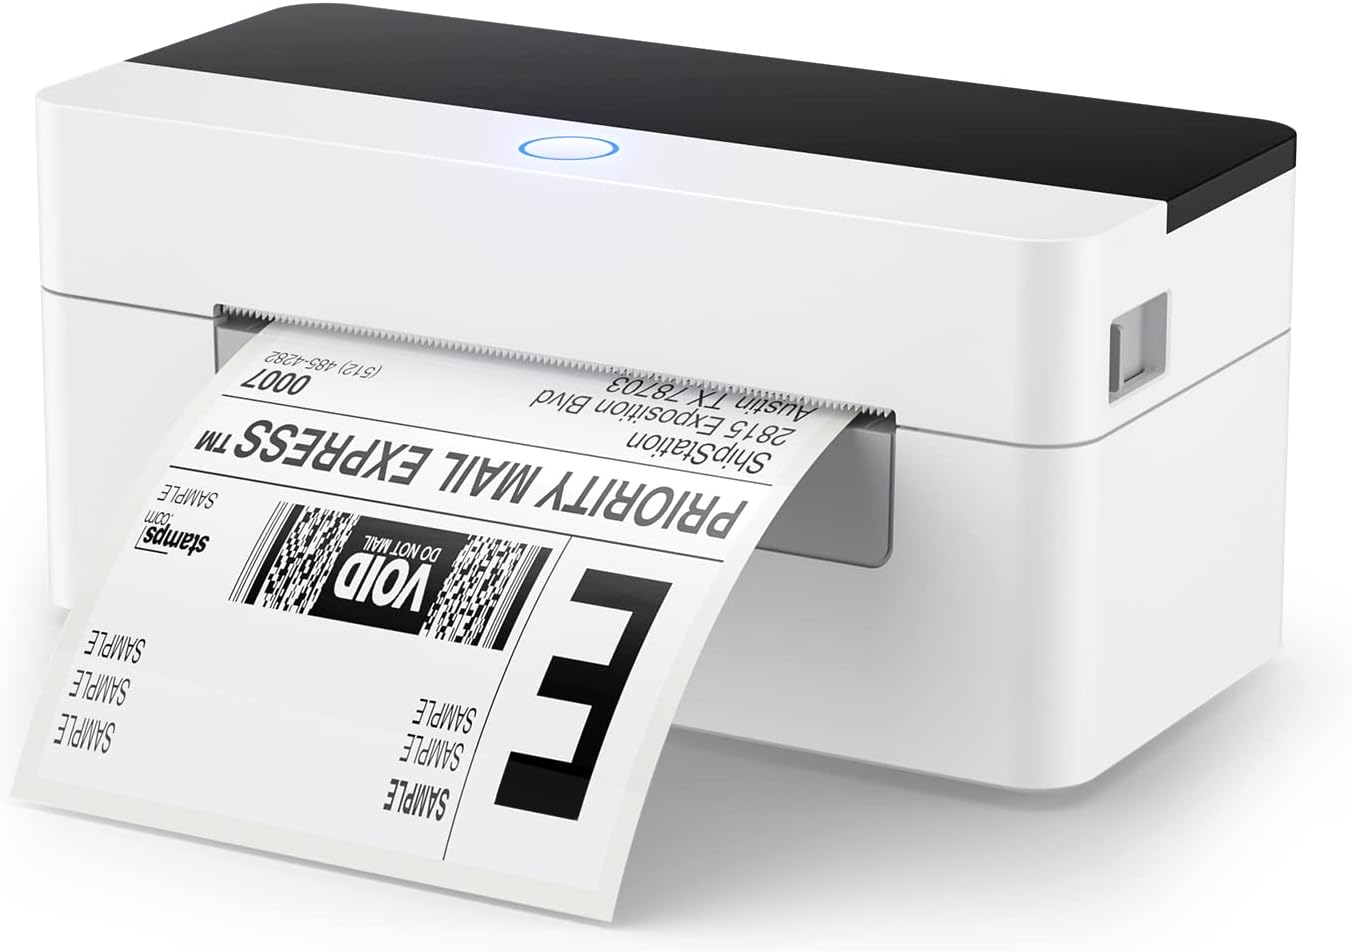 OFFNOVA Shipping Label Printer, 4x6 Label Printer for [...]